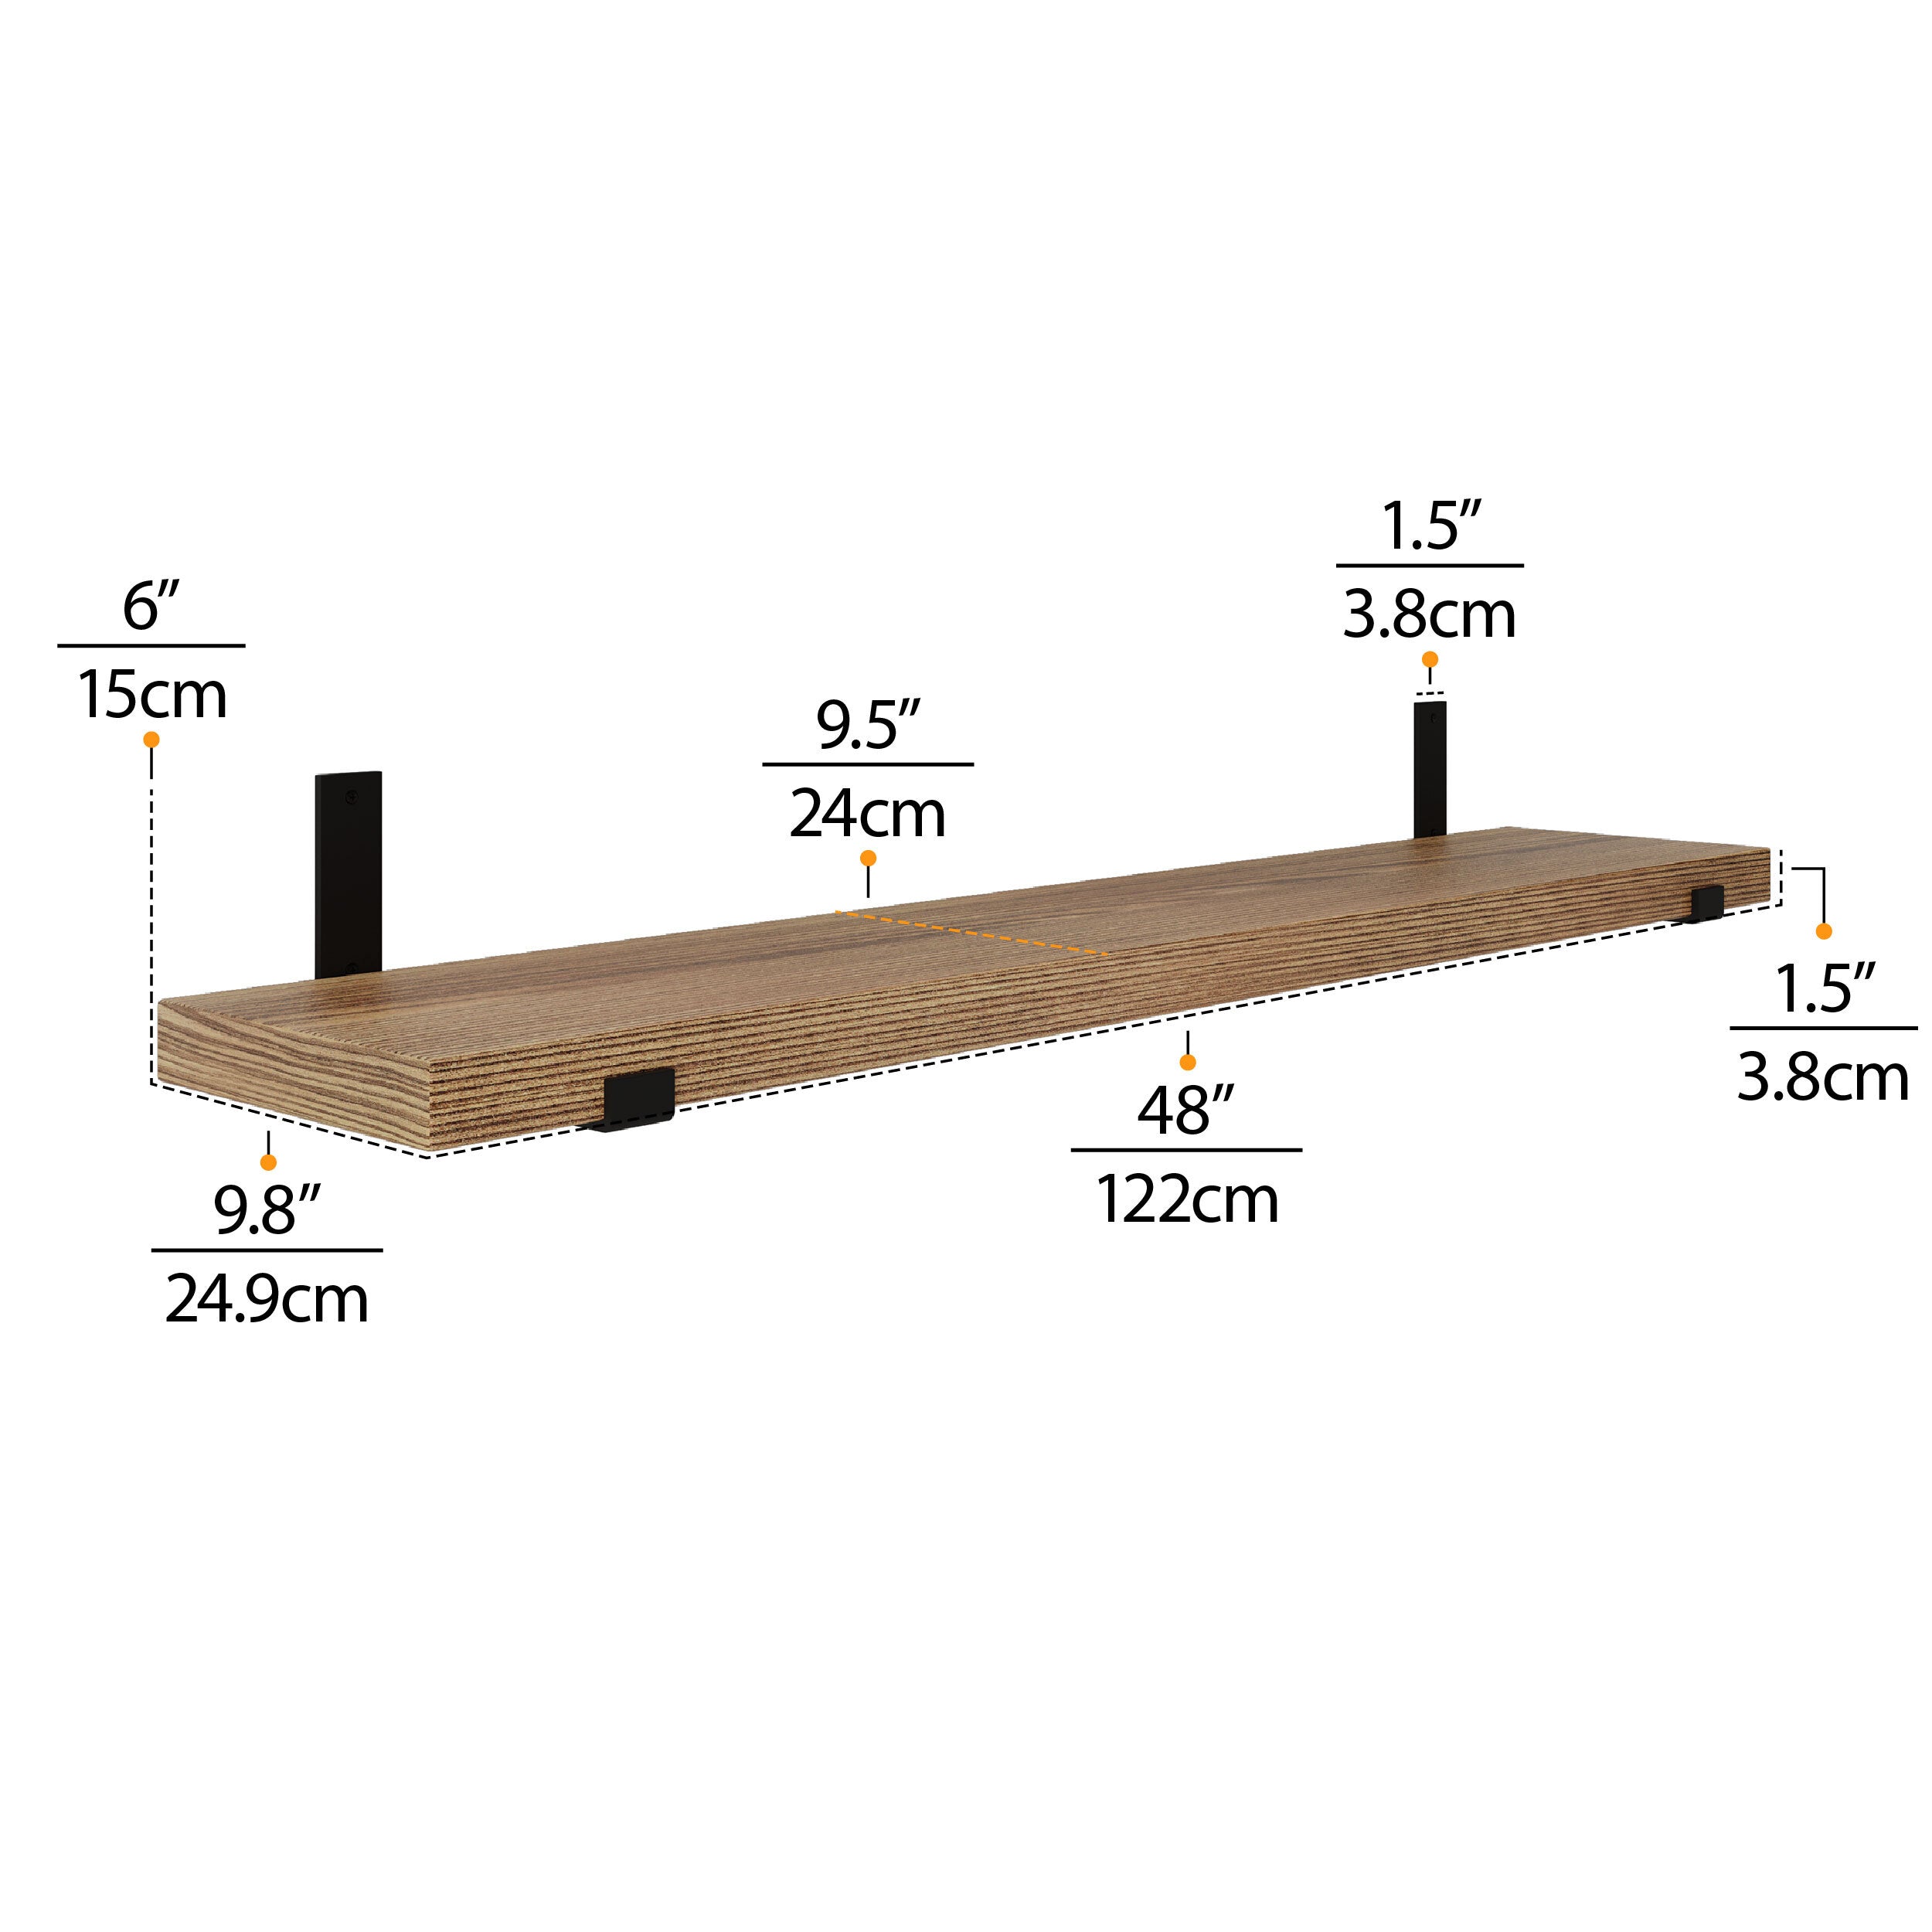 Measurements of a 48'' rustic wooden shelf with black bracket details.